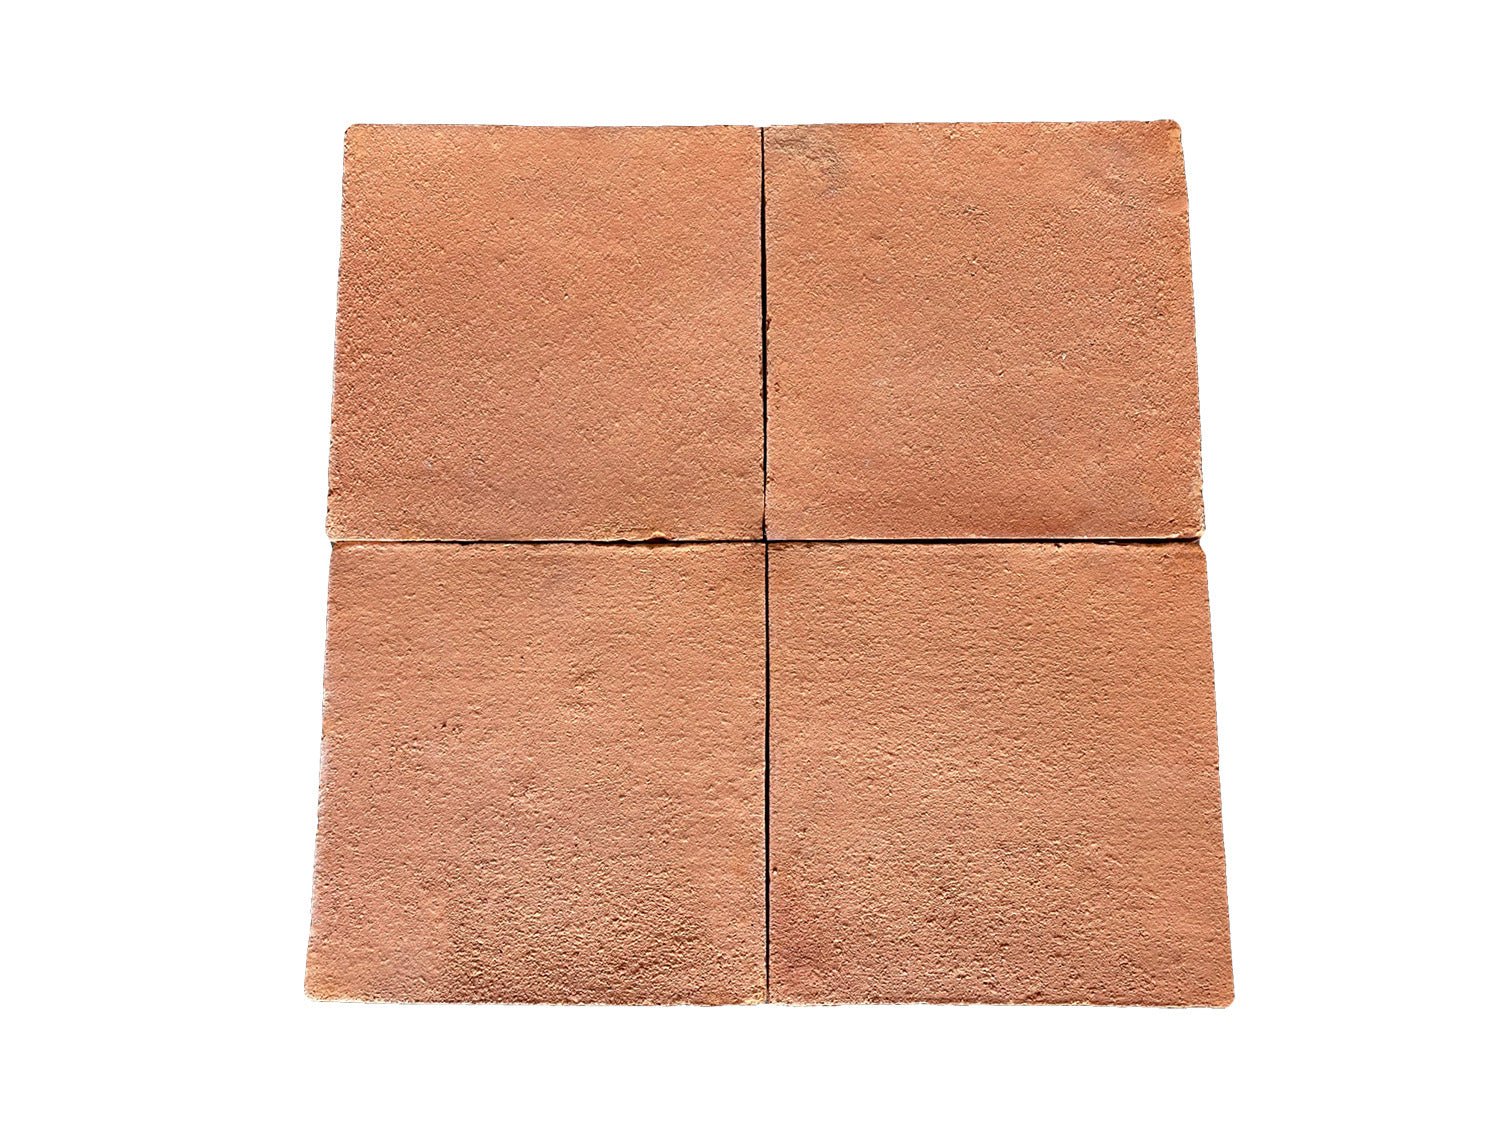 Terracotta tegels 30x30x2cm Roja - Handgemaakt - Solza.nl